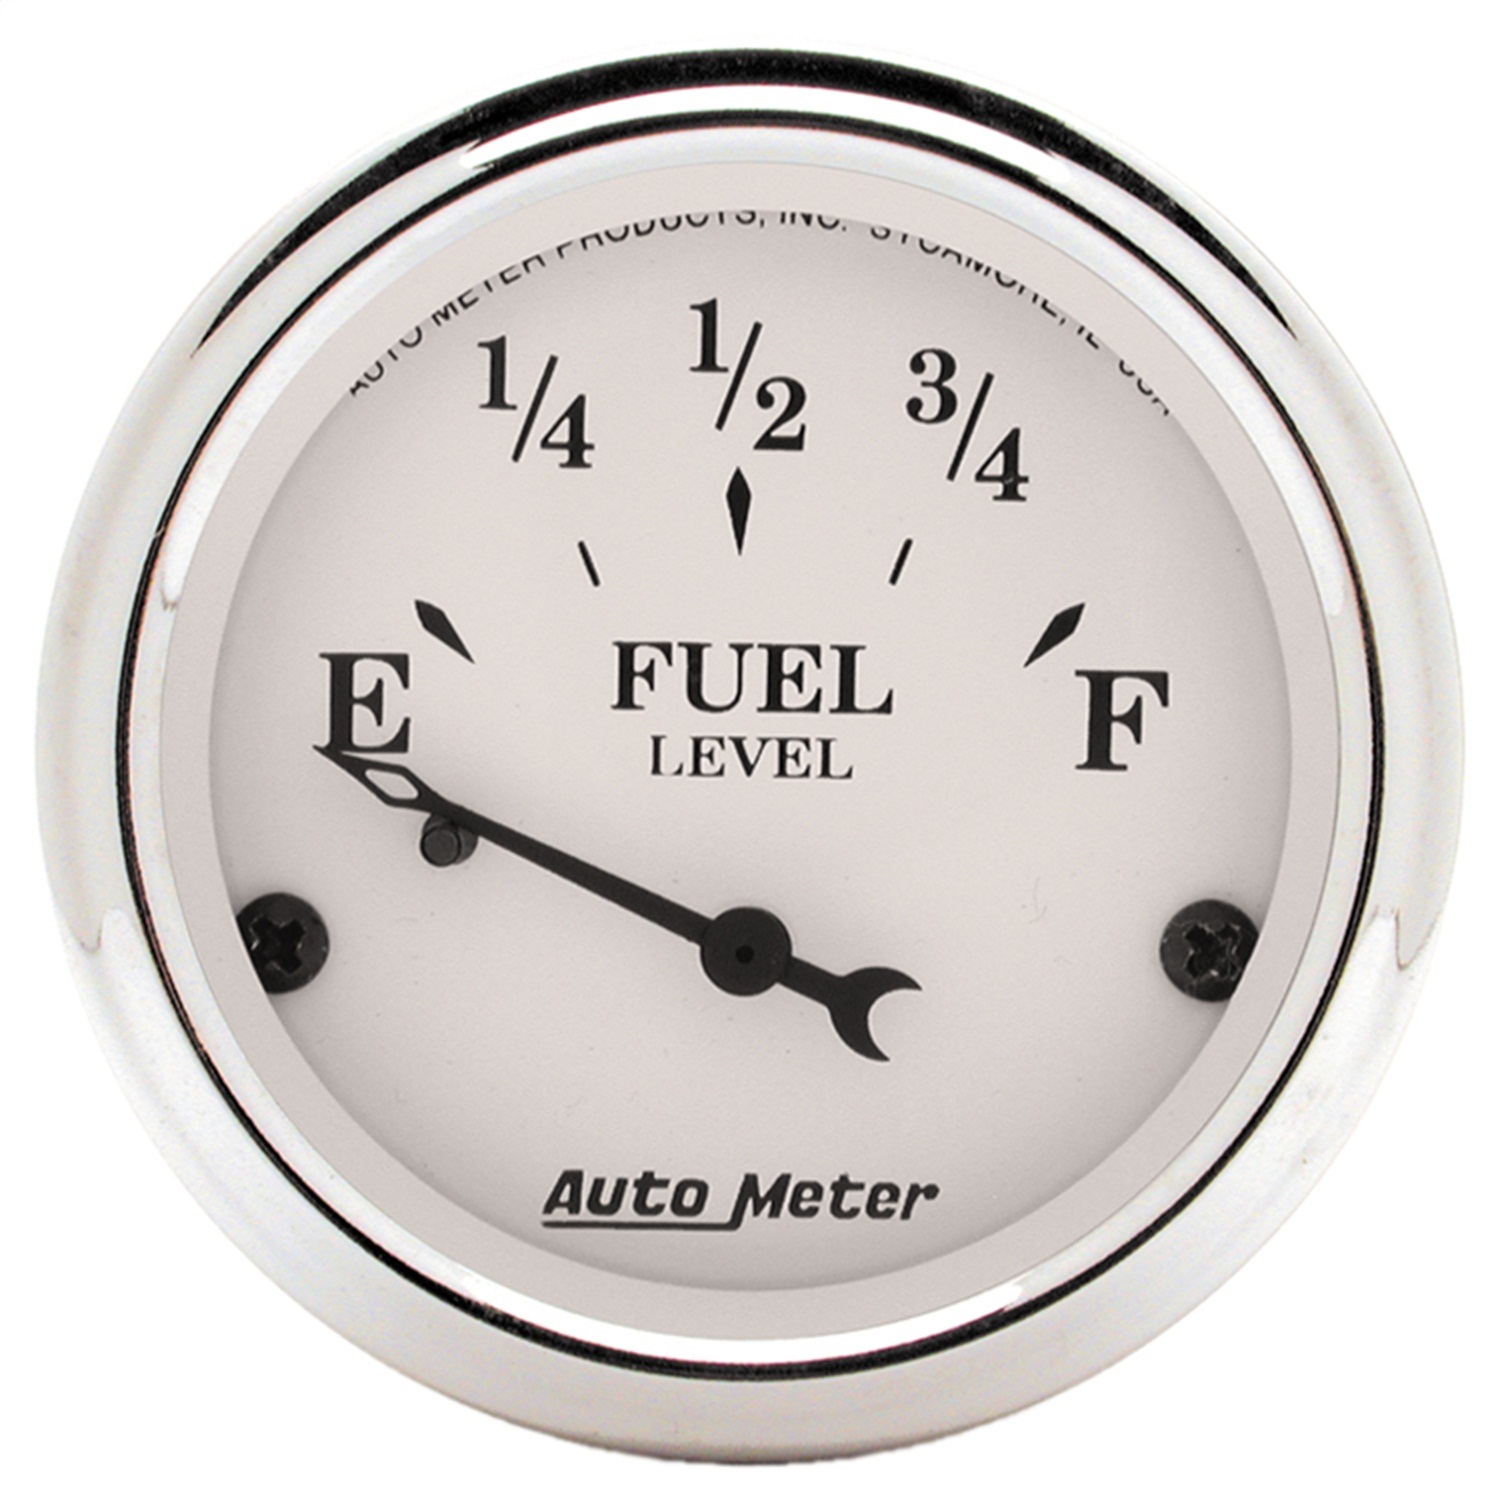 Auto Meter Auto Meter 1604 Old Tyme White; Fuel Level Gauge